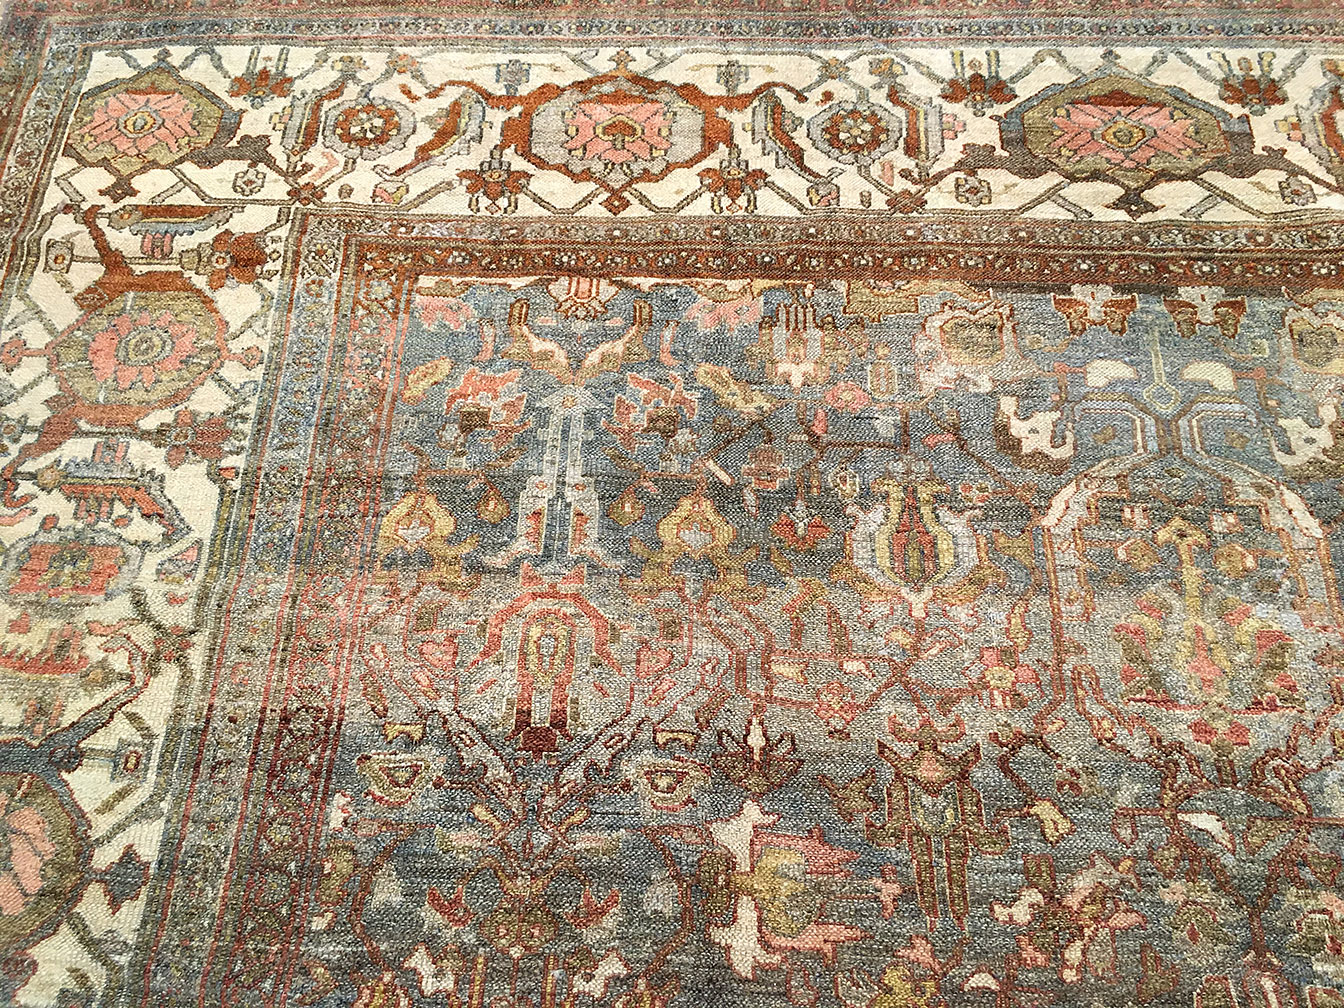 Antique bibi kabad Carpet - # 51144